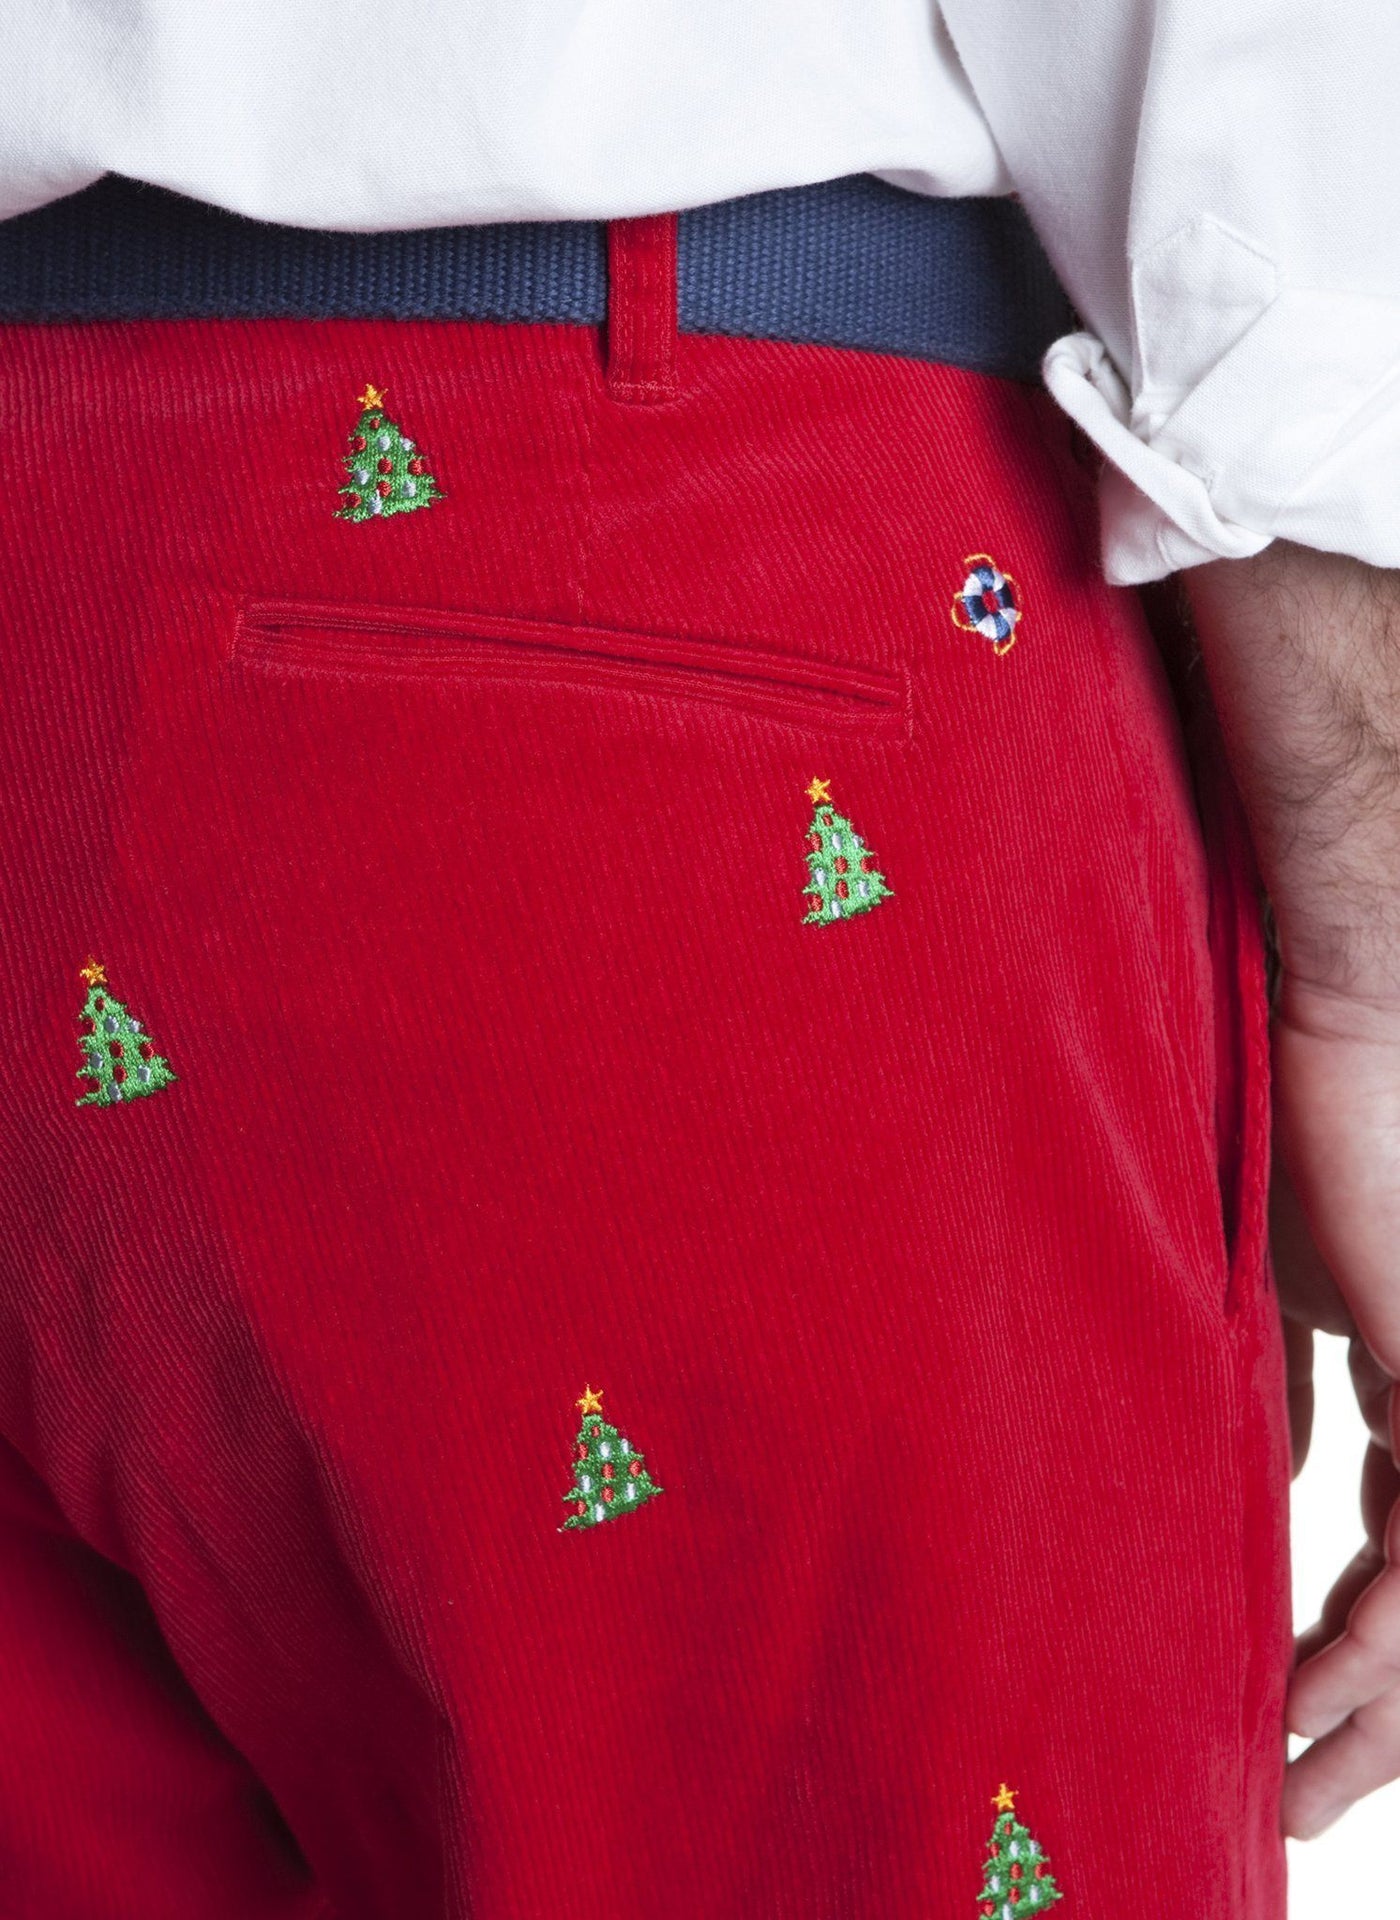 Beachcomber Corduroy Pant Crimson with Christmas Tree - MENS EMBROIDERED PANTS - Castaway Nantucket Island